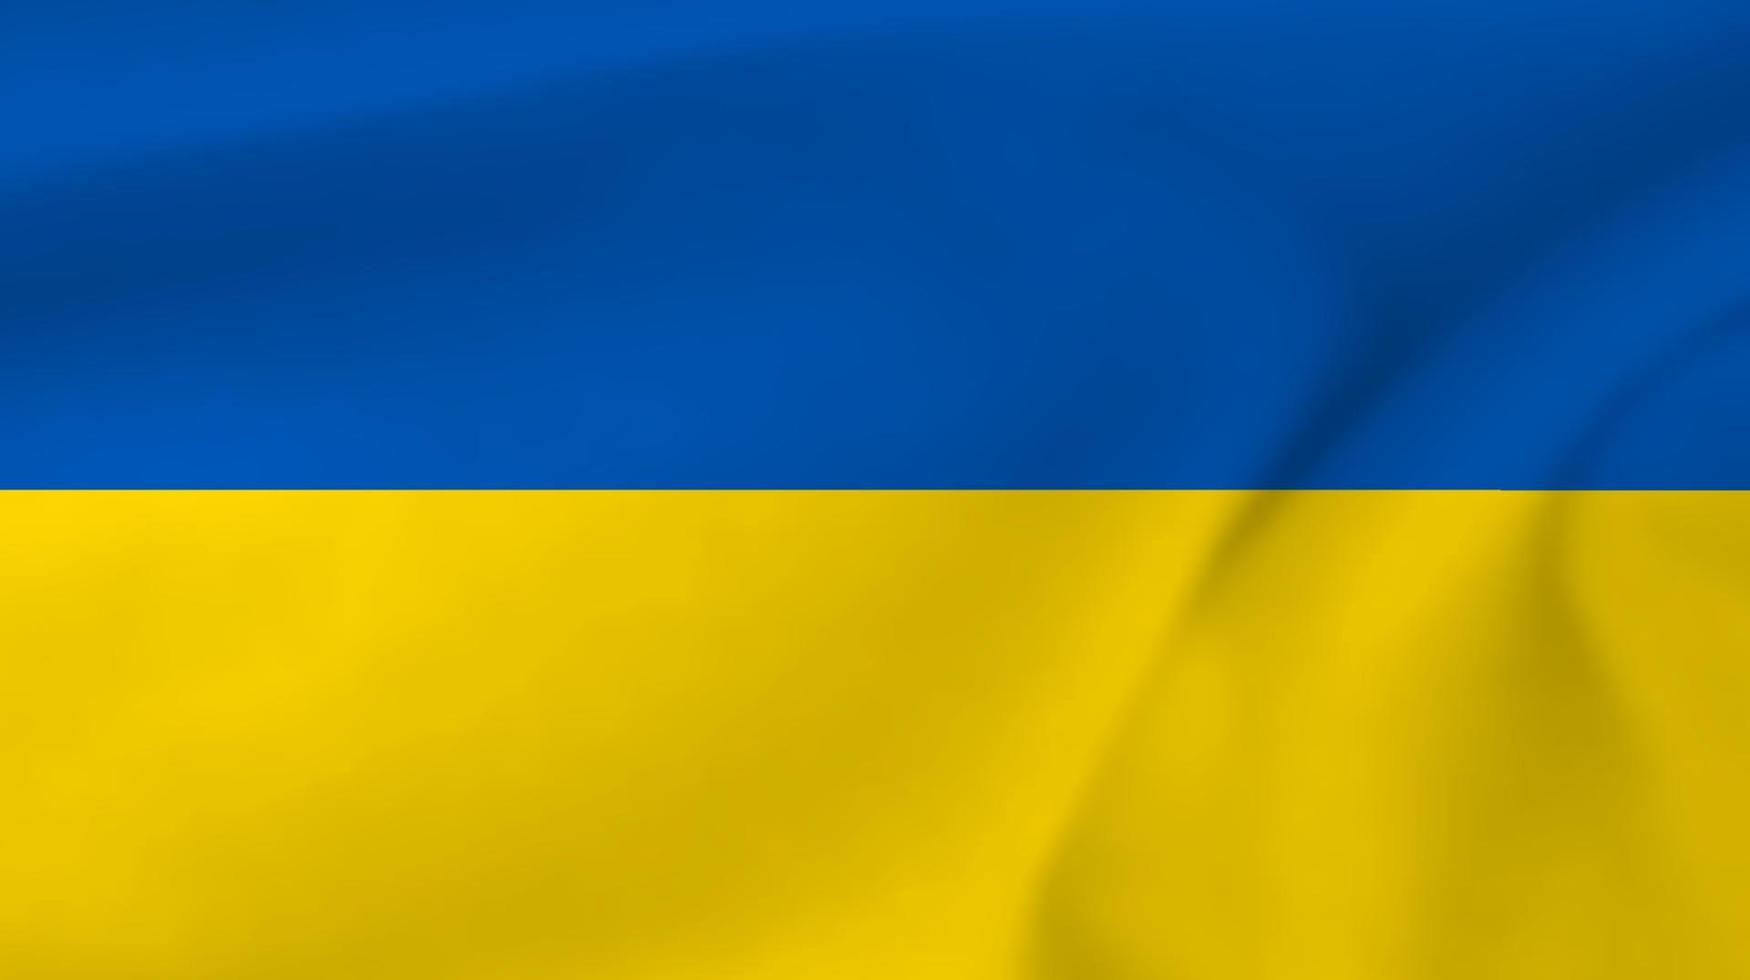 ukrainische nationalflagge vektor